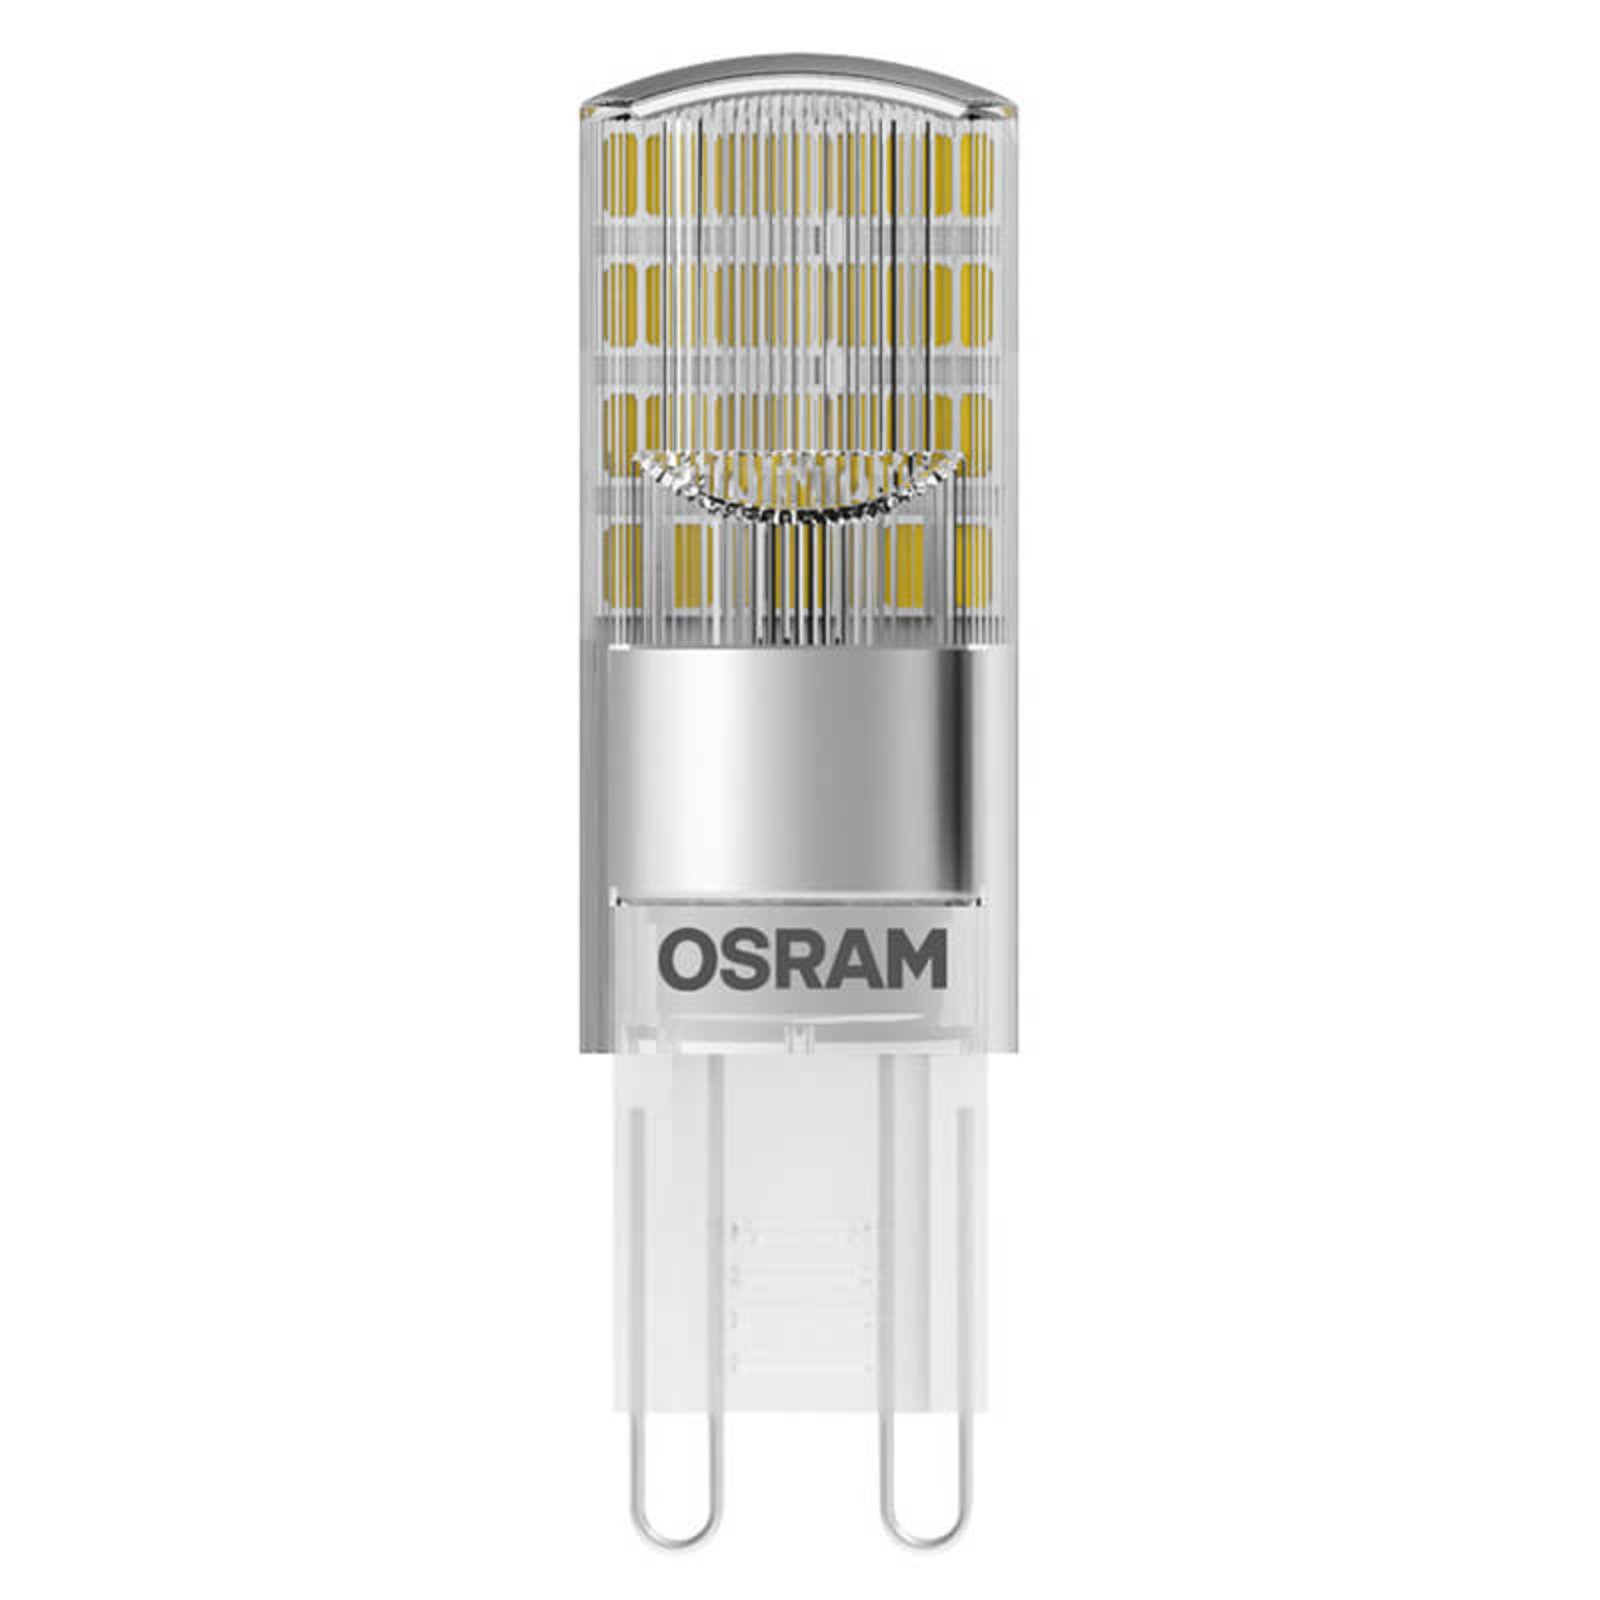 OSRAM bi-pin LED bulb G9 2.6 W warm white 320 lm